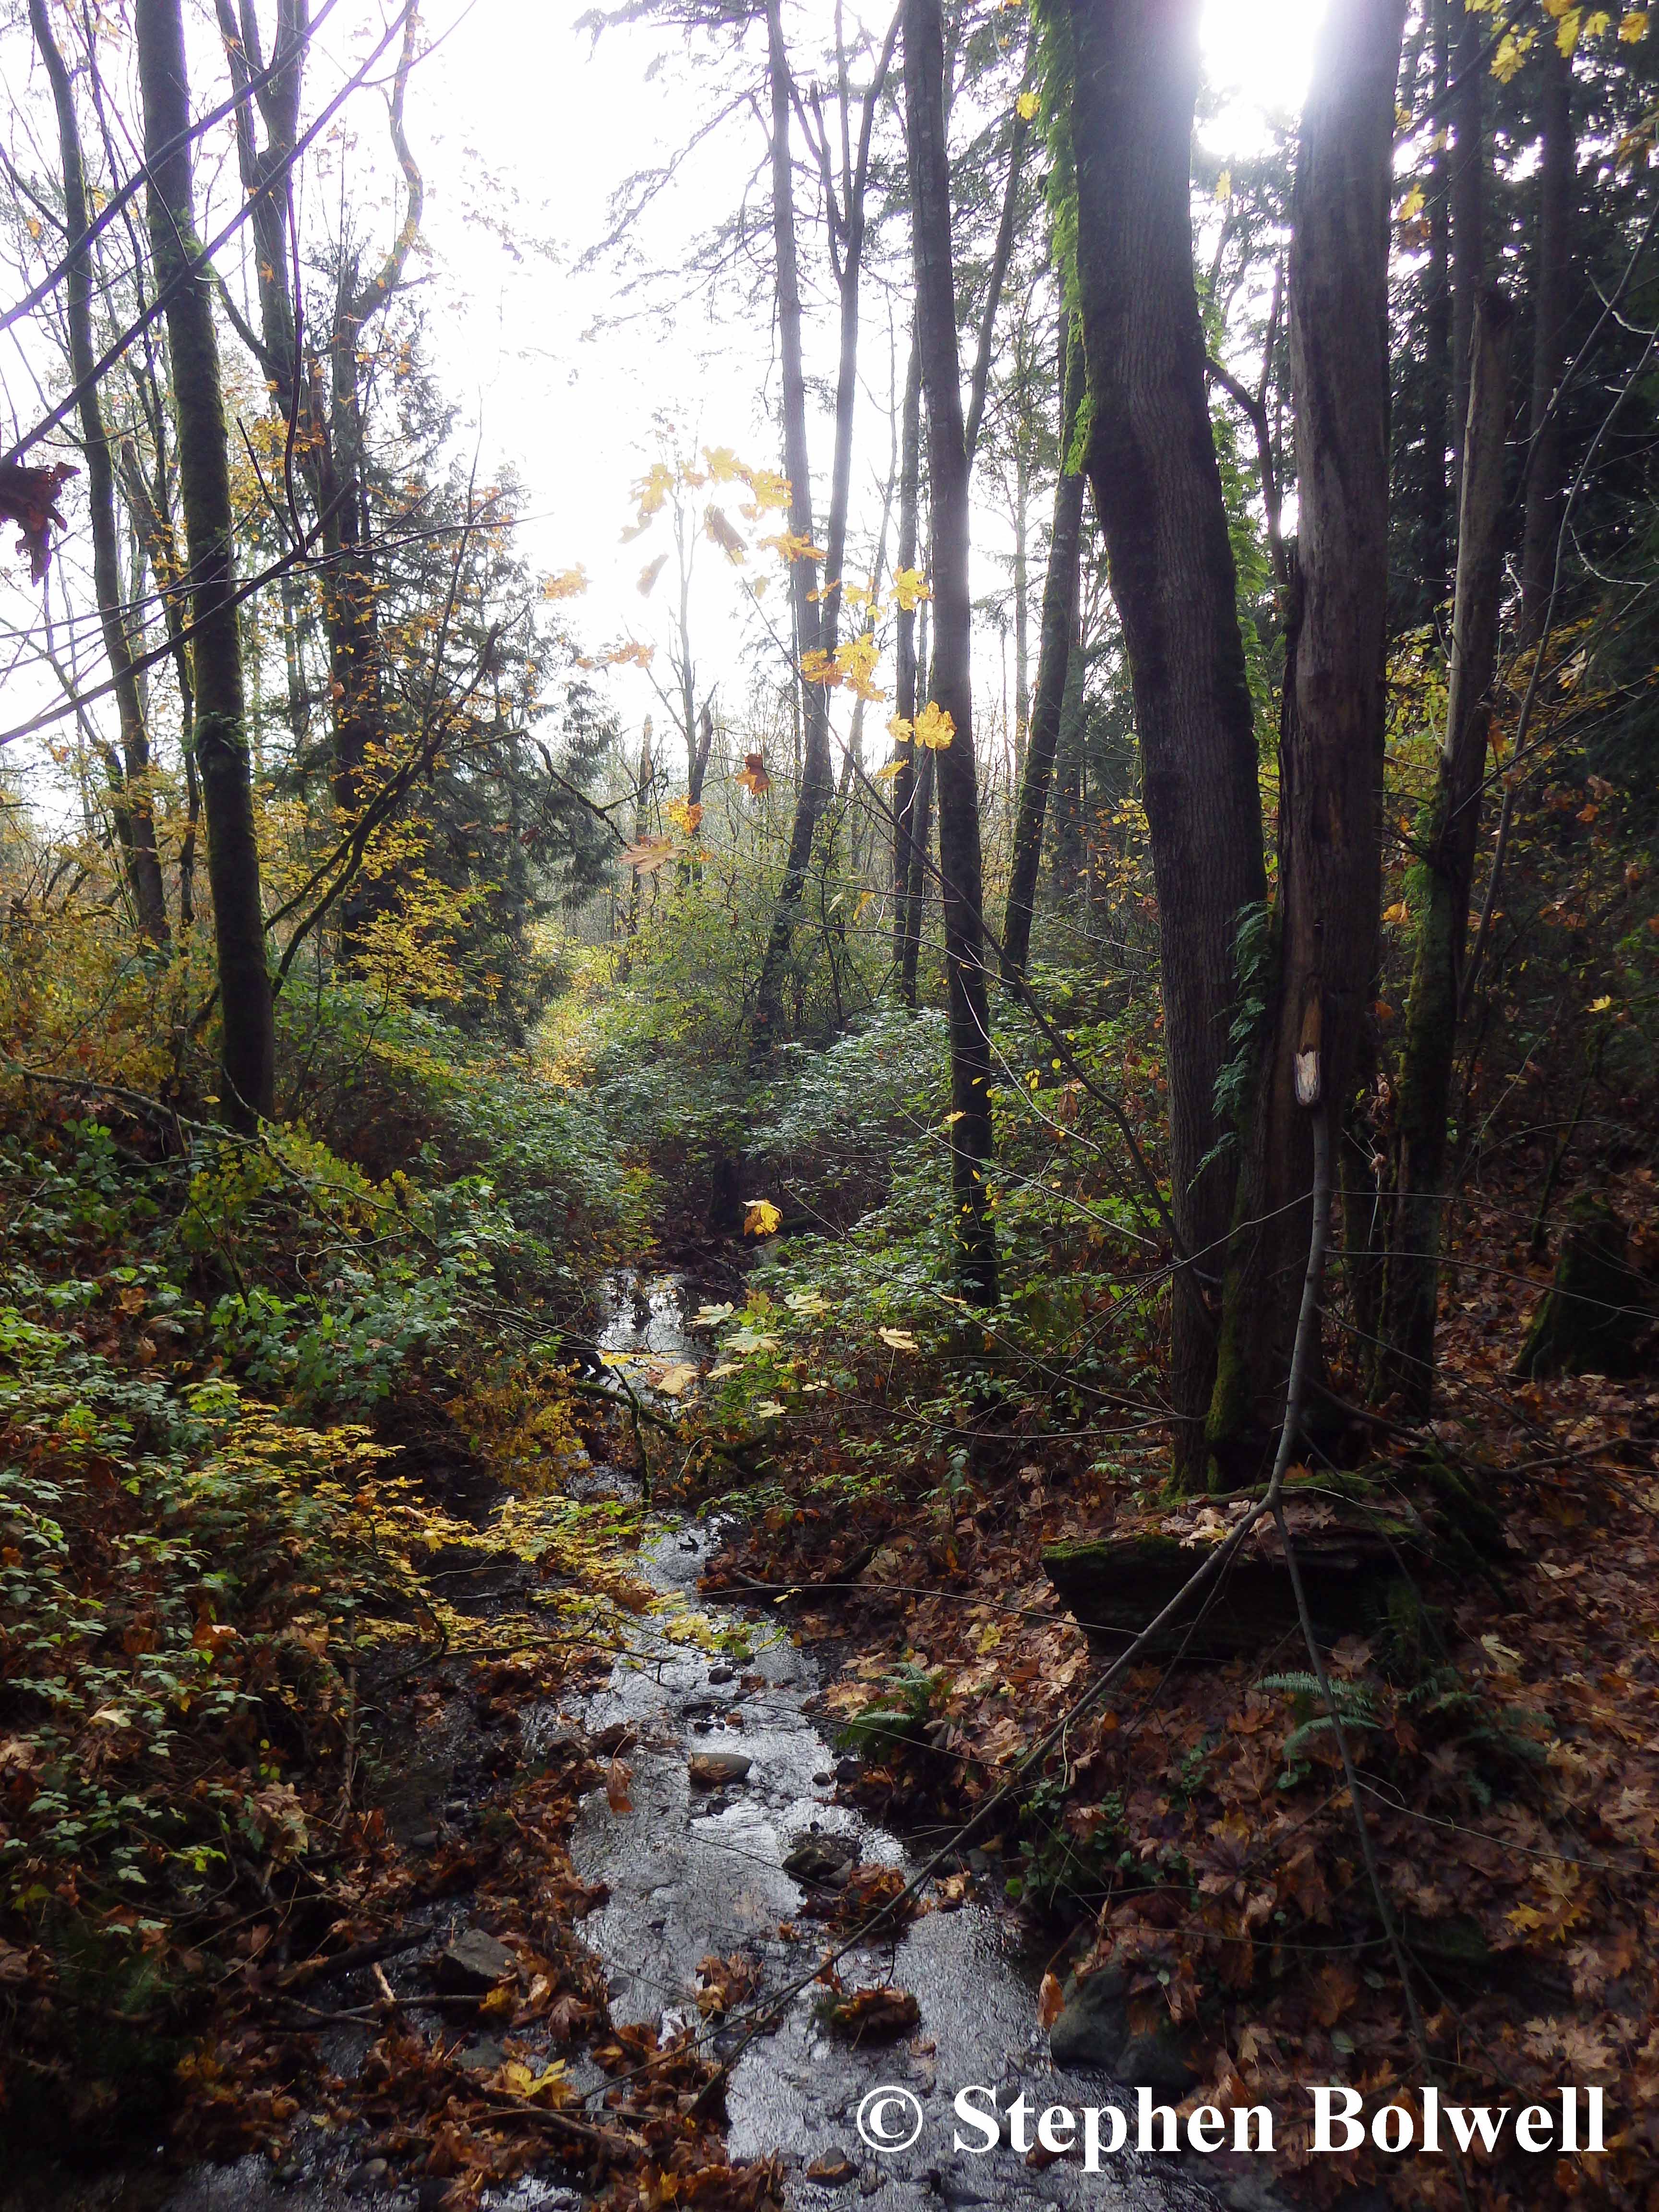 The stream in Autumn.